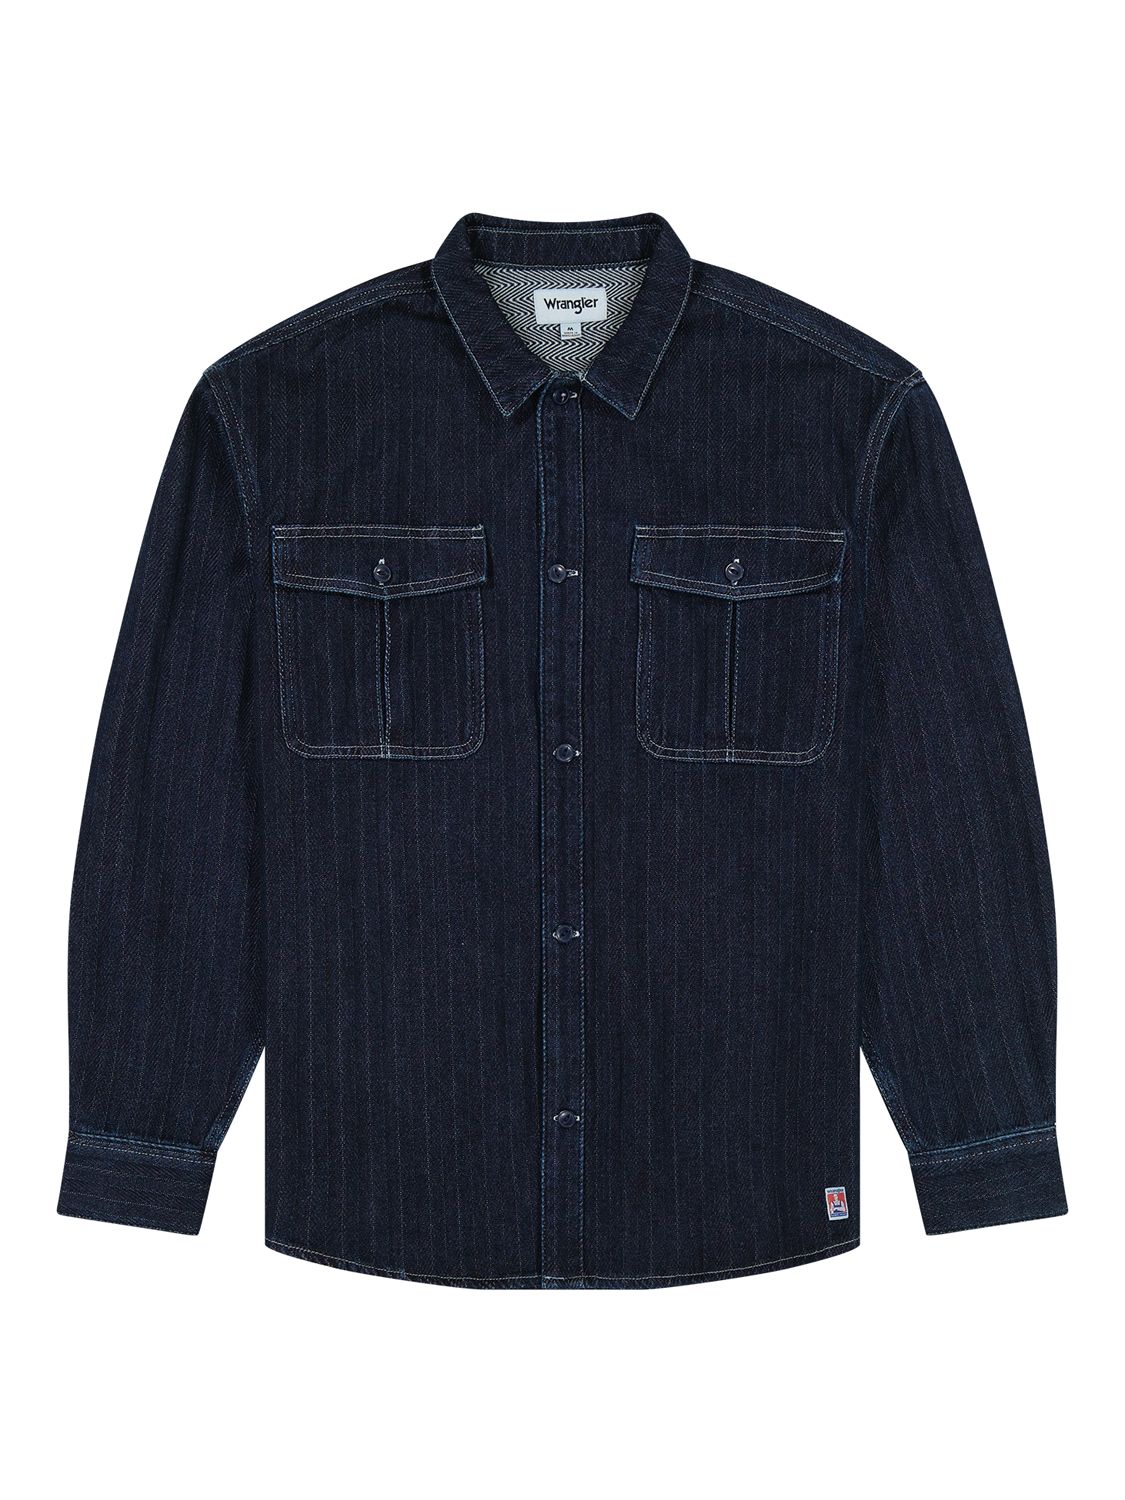 Wrangler Casey Jones Utilty Shirt, Medium Indigo, XL